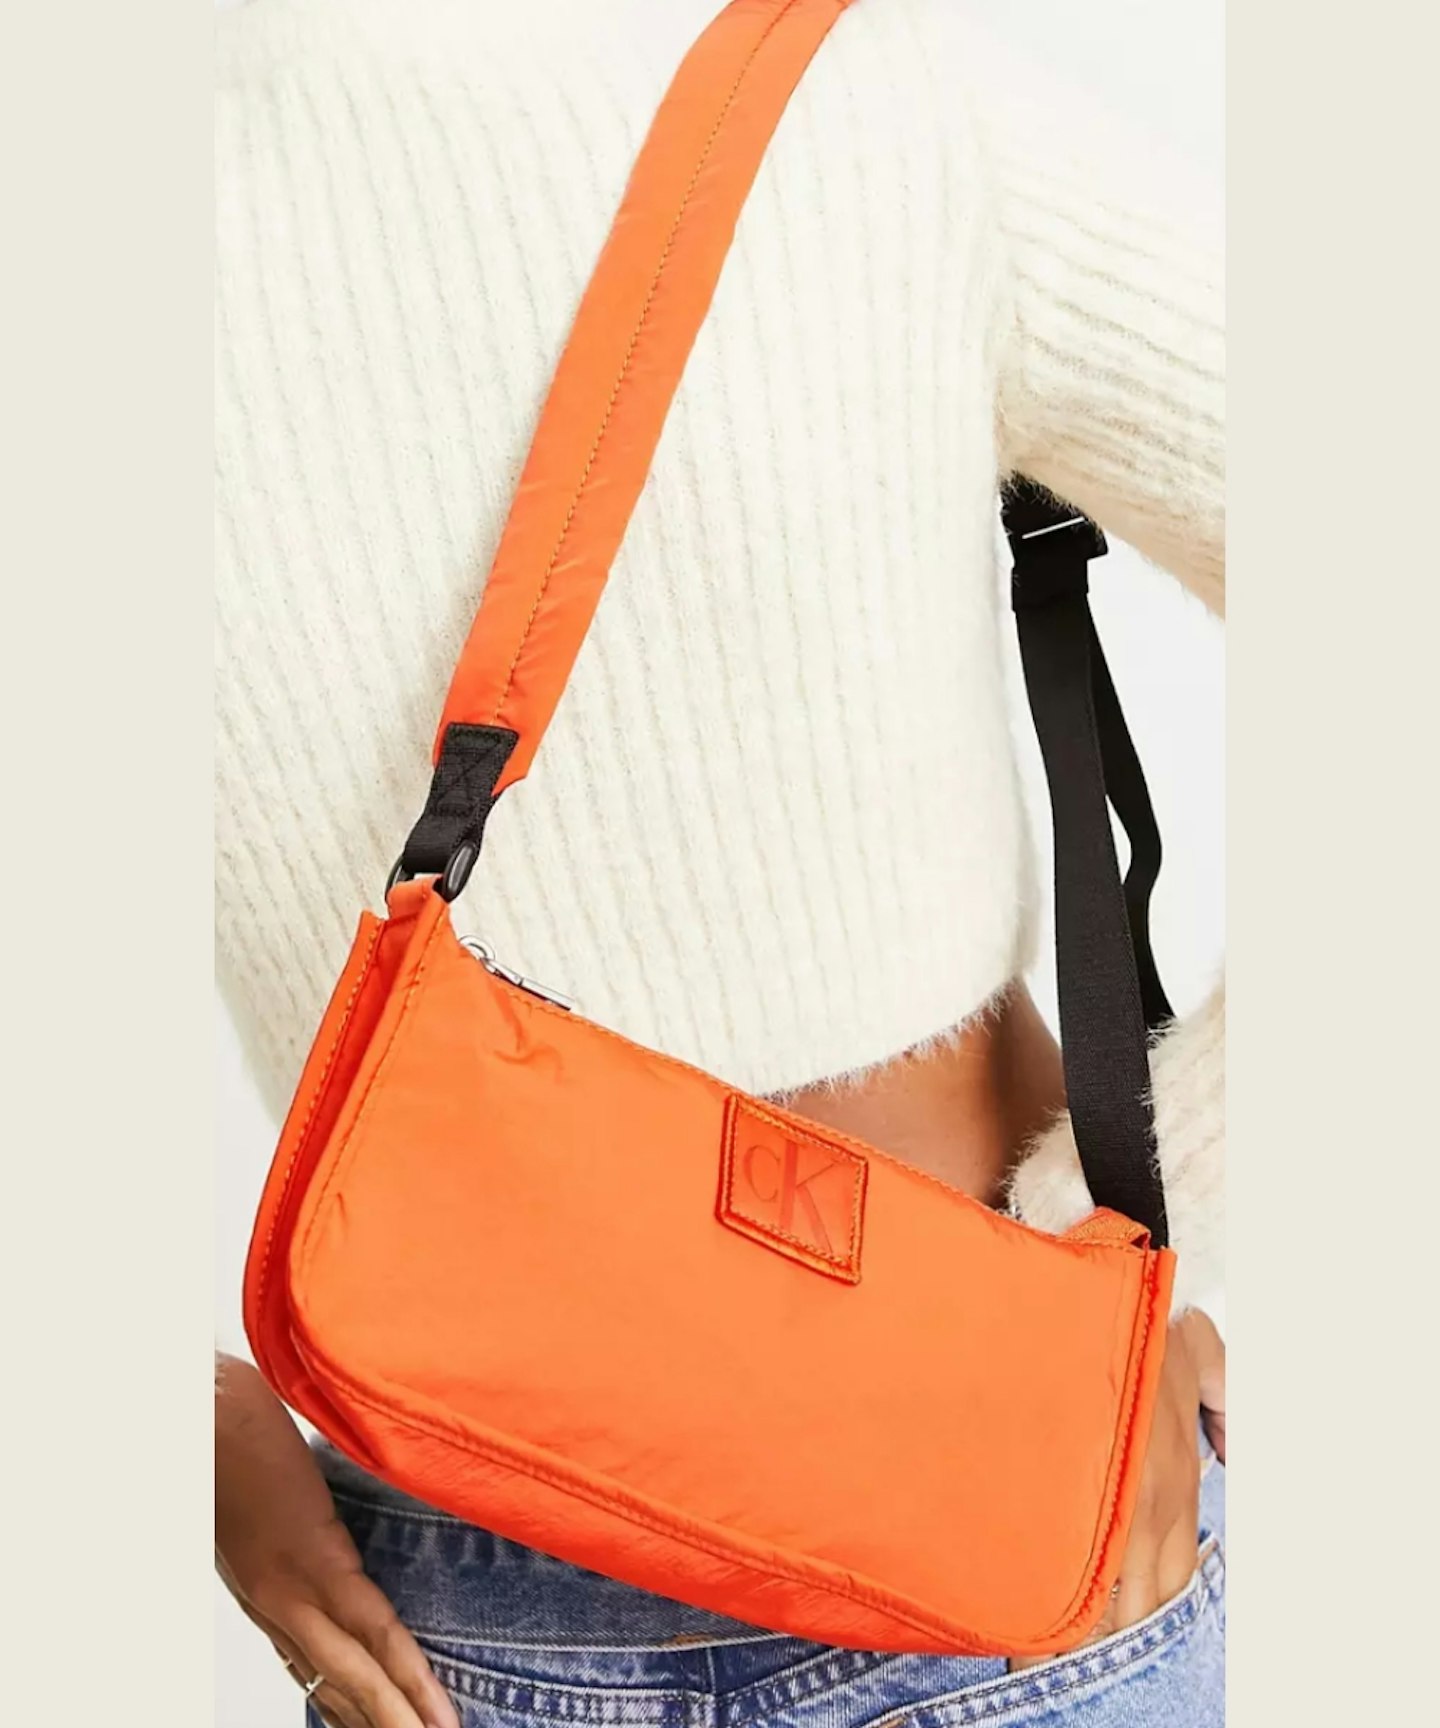 Calvin Klein Jeans City Nylon Shoulder Bag in Coral Orange